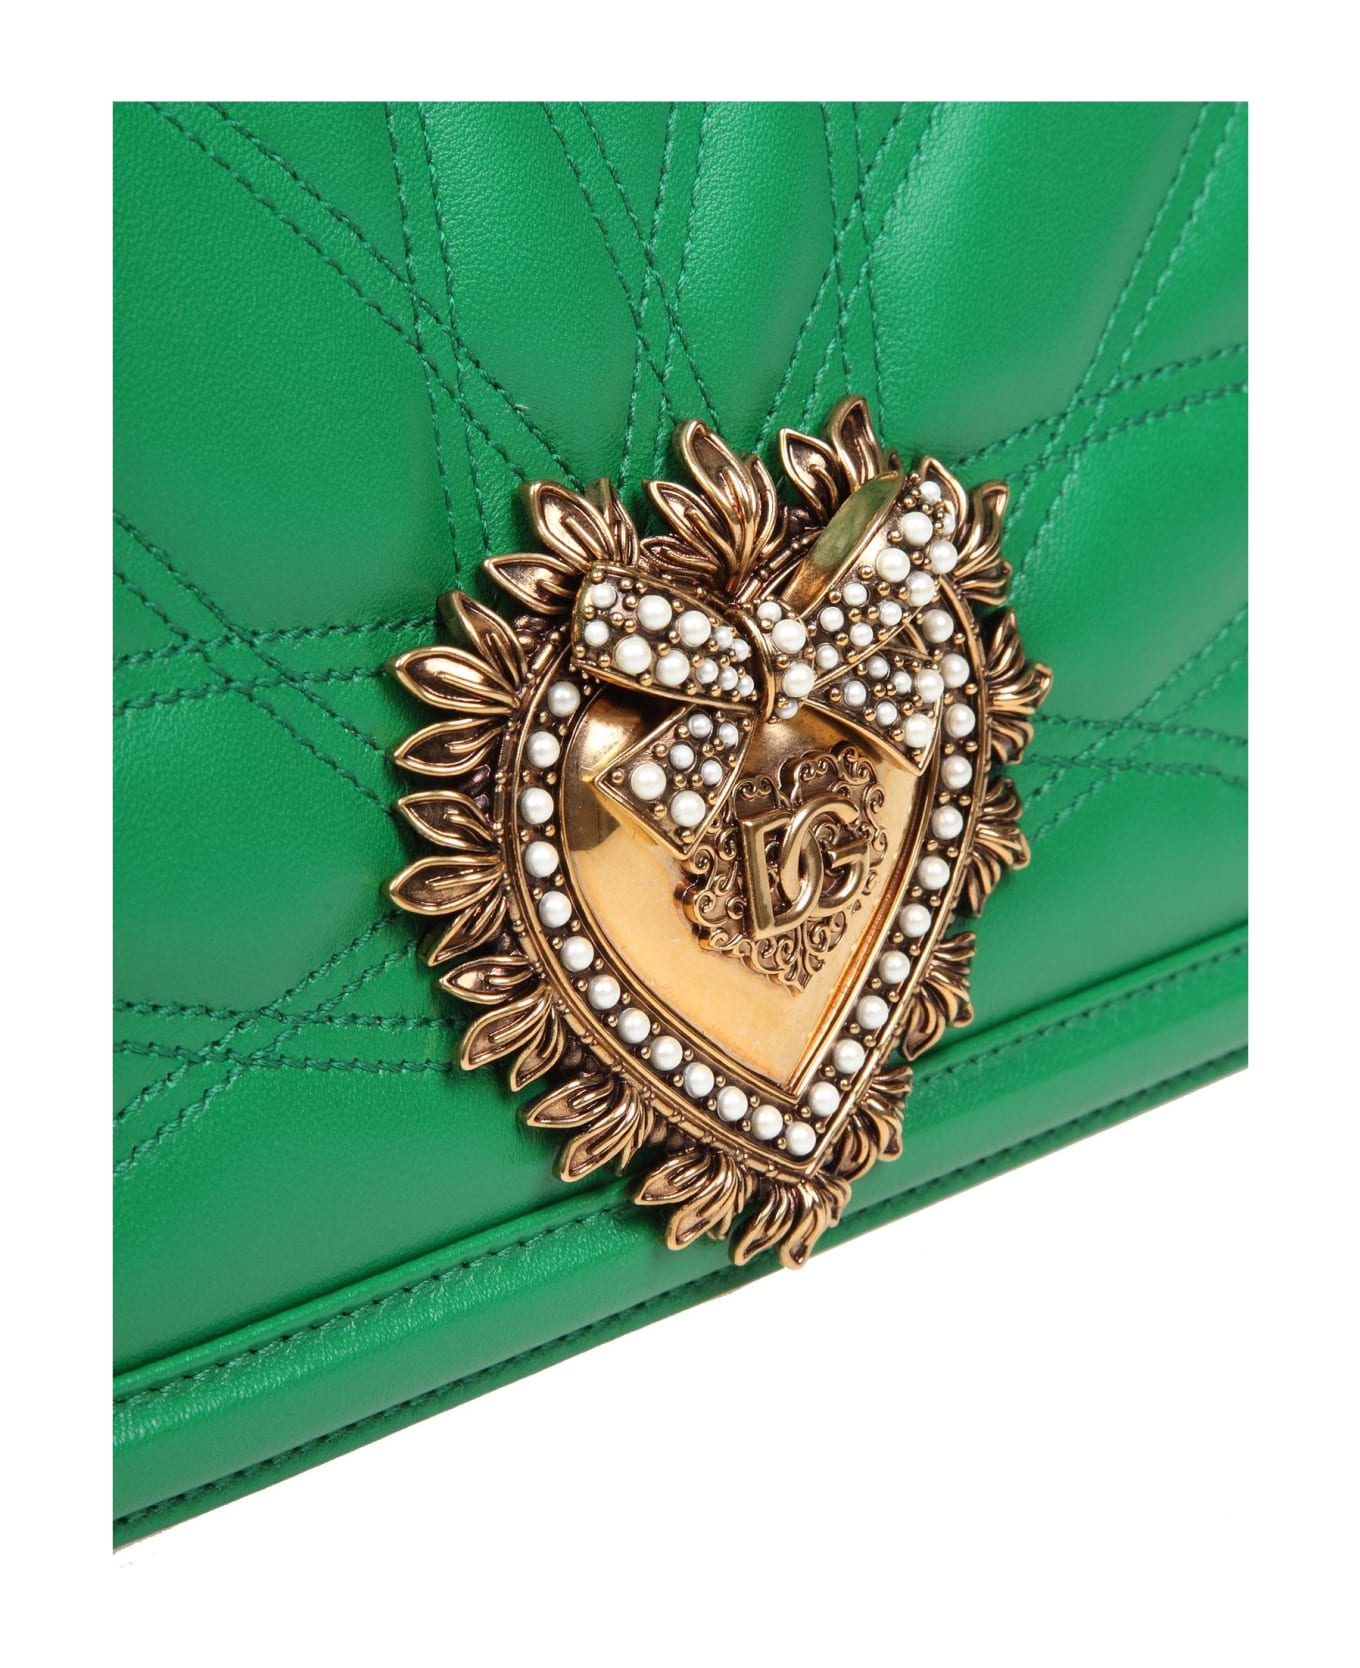 Dolce & Gabbana Devotion Bag - Green